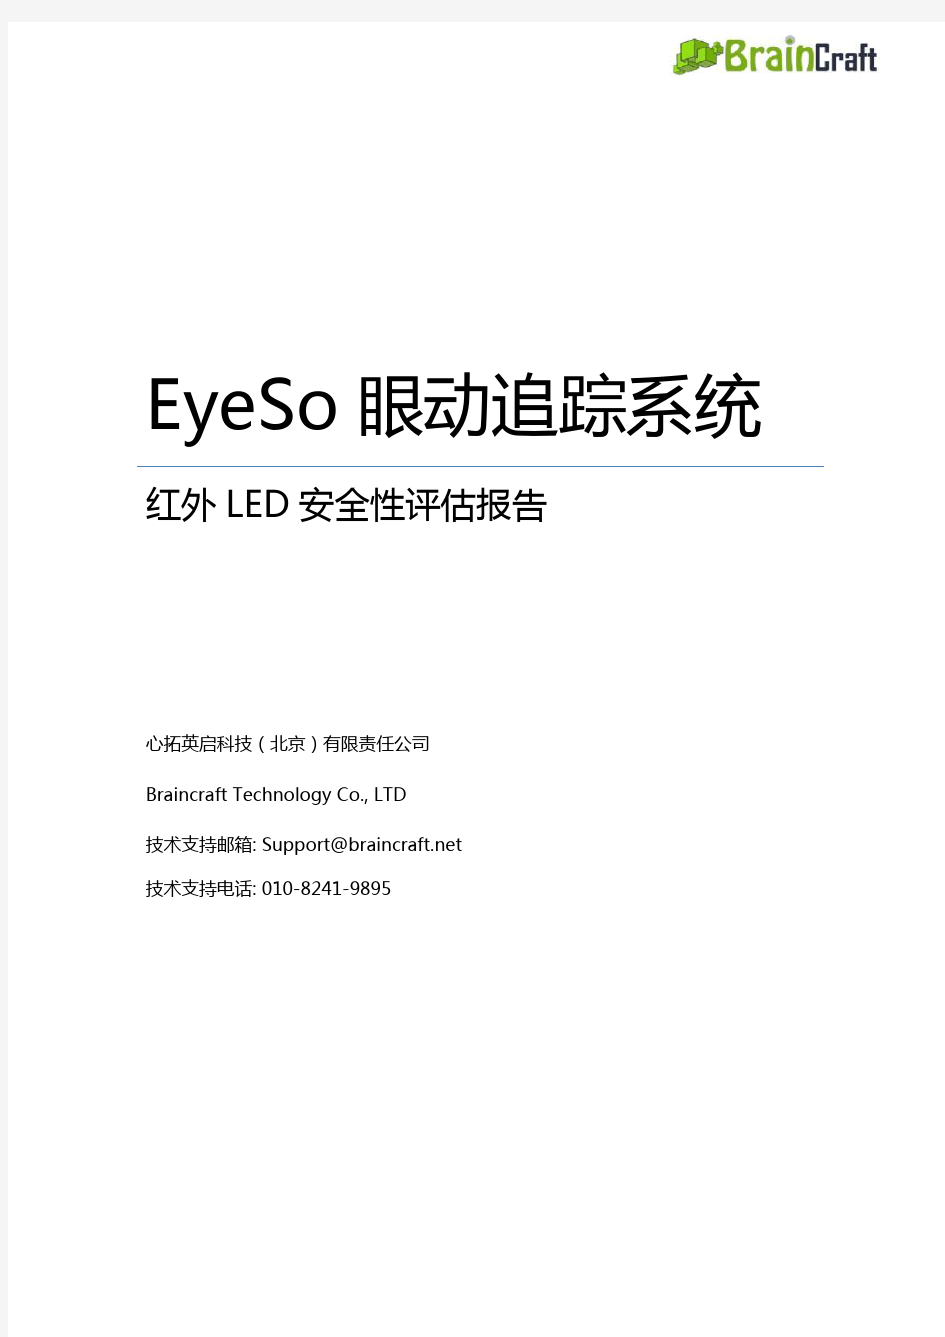 EyeSo眼动追踪系统